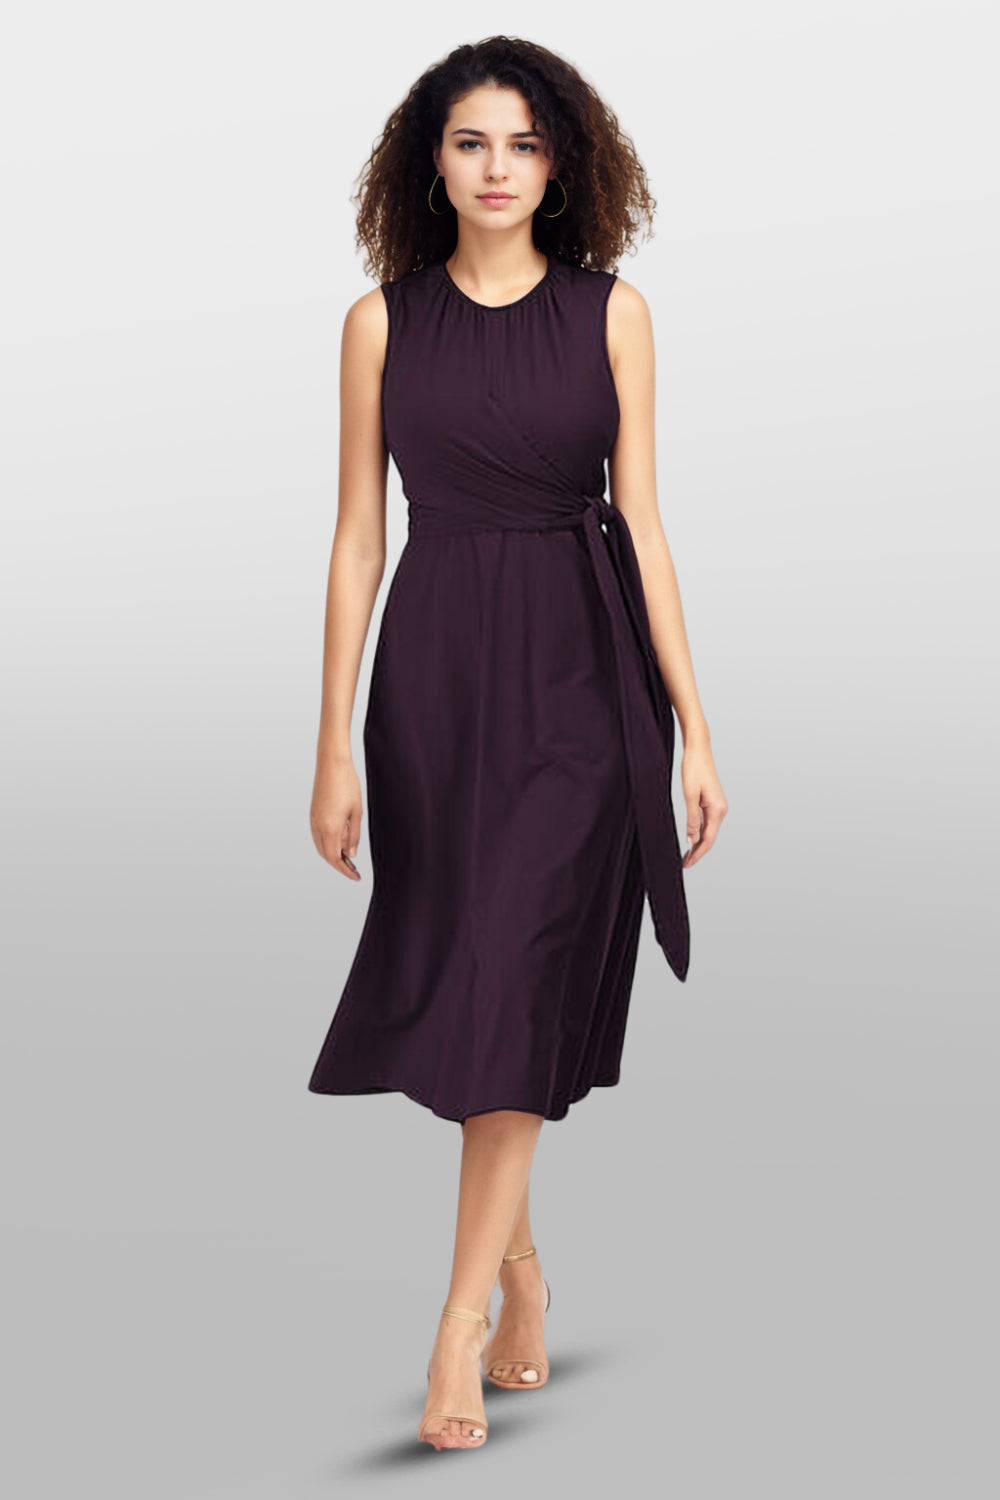 Elation purple Dress